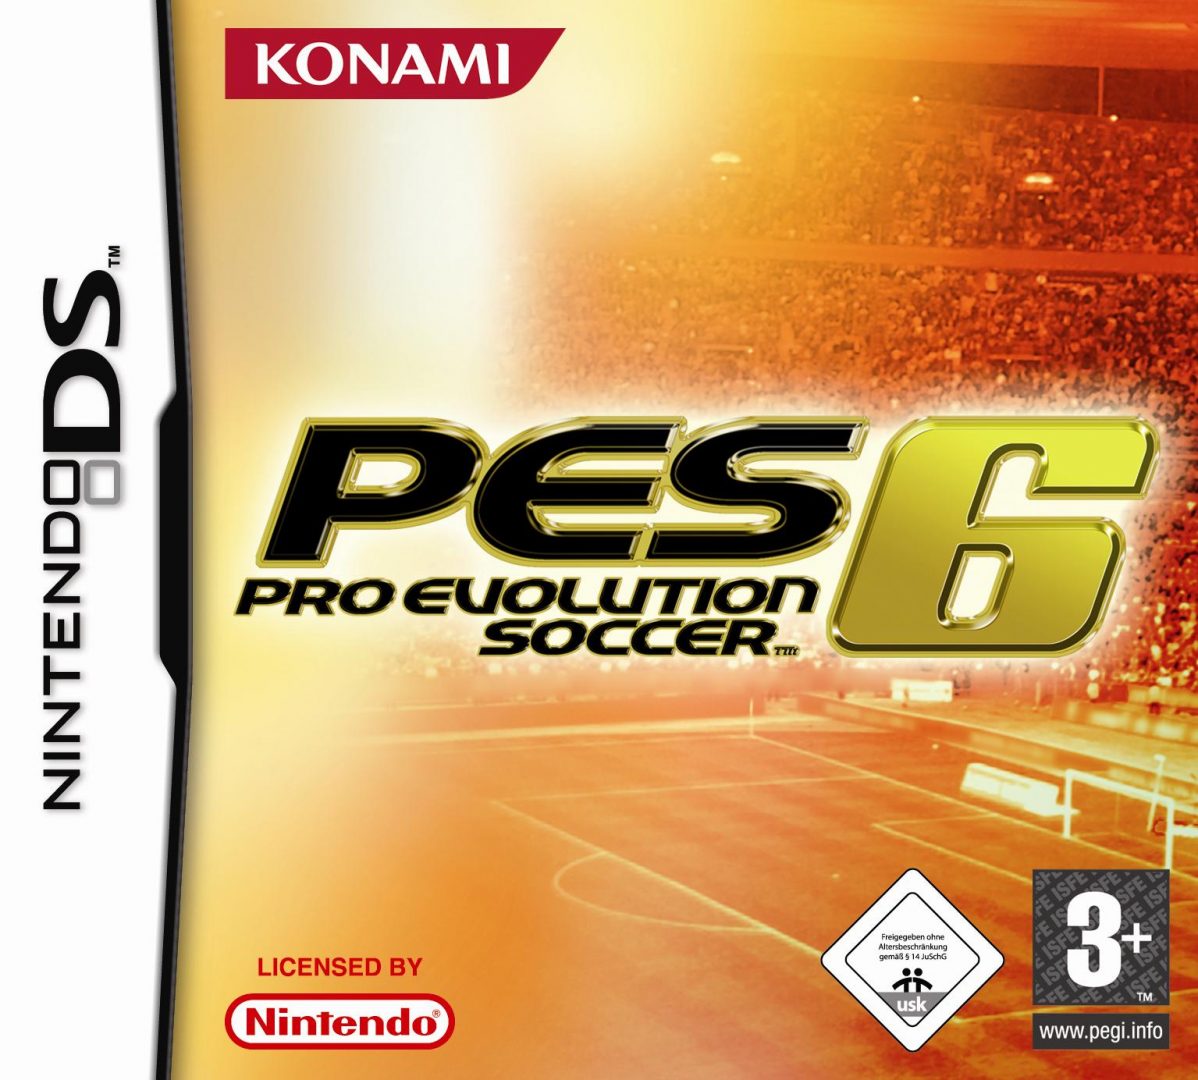 The coverart image of Pro Evolution Soccer 6